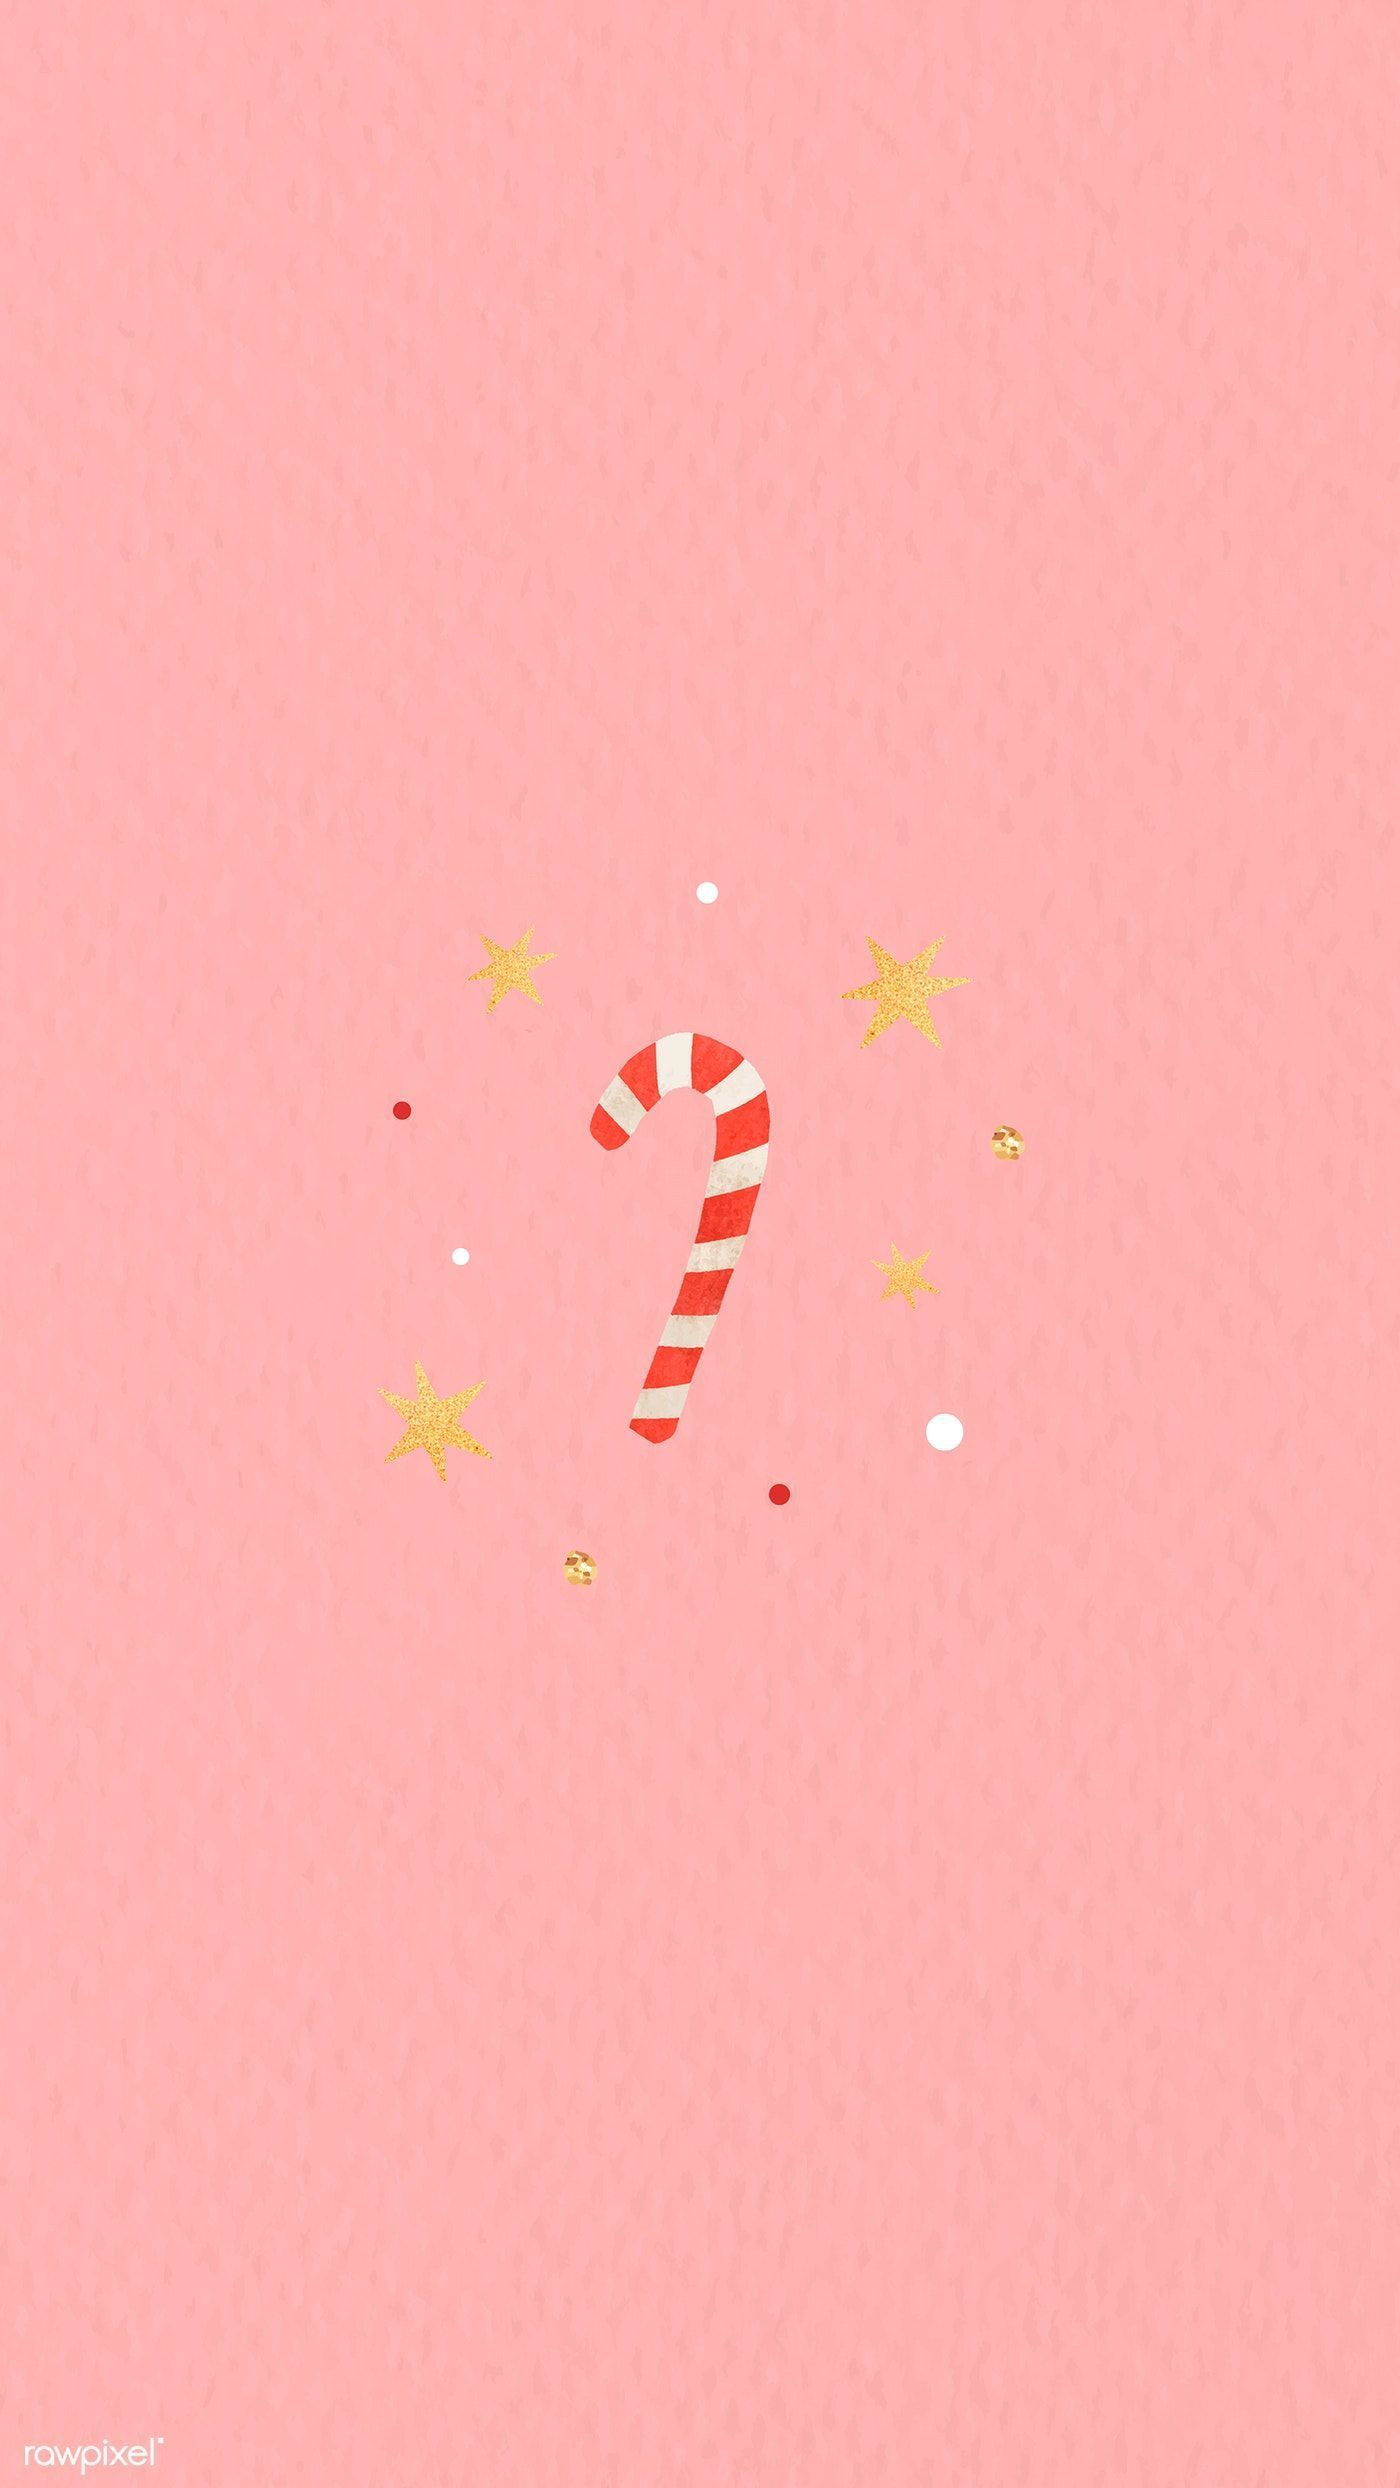 Cute candy cane mobile phone wallpaper vector / Toon. Wallpaper iphone christmas, Phone wallpaper, Christmas wallpaper